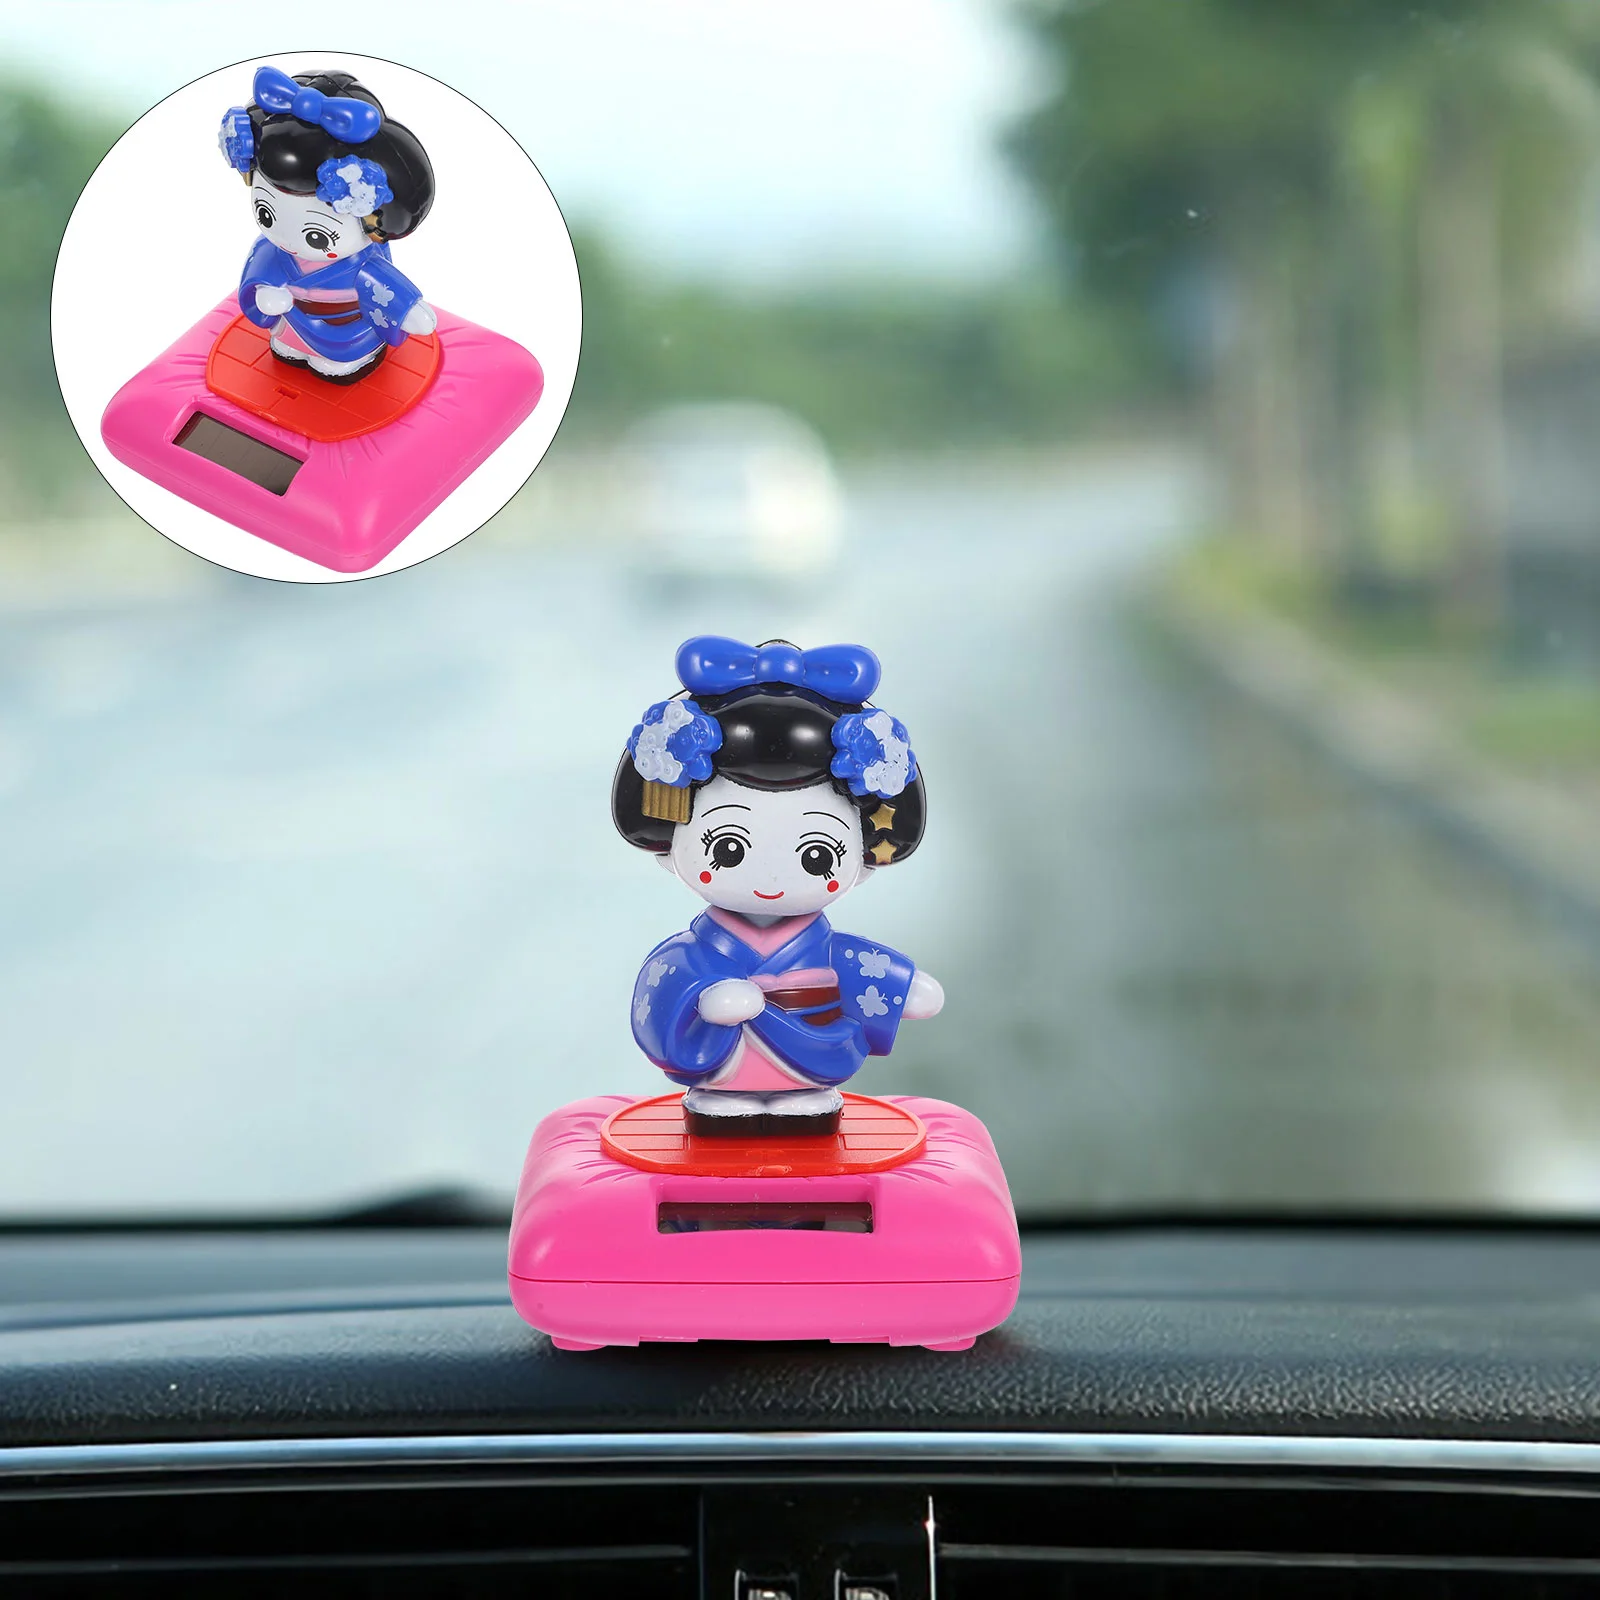 

Solar Car Desktop Kimono Ornaments Small Cute Figure Statues Decorations Plastic Craft Figurines